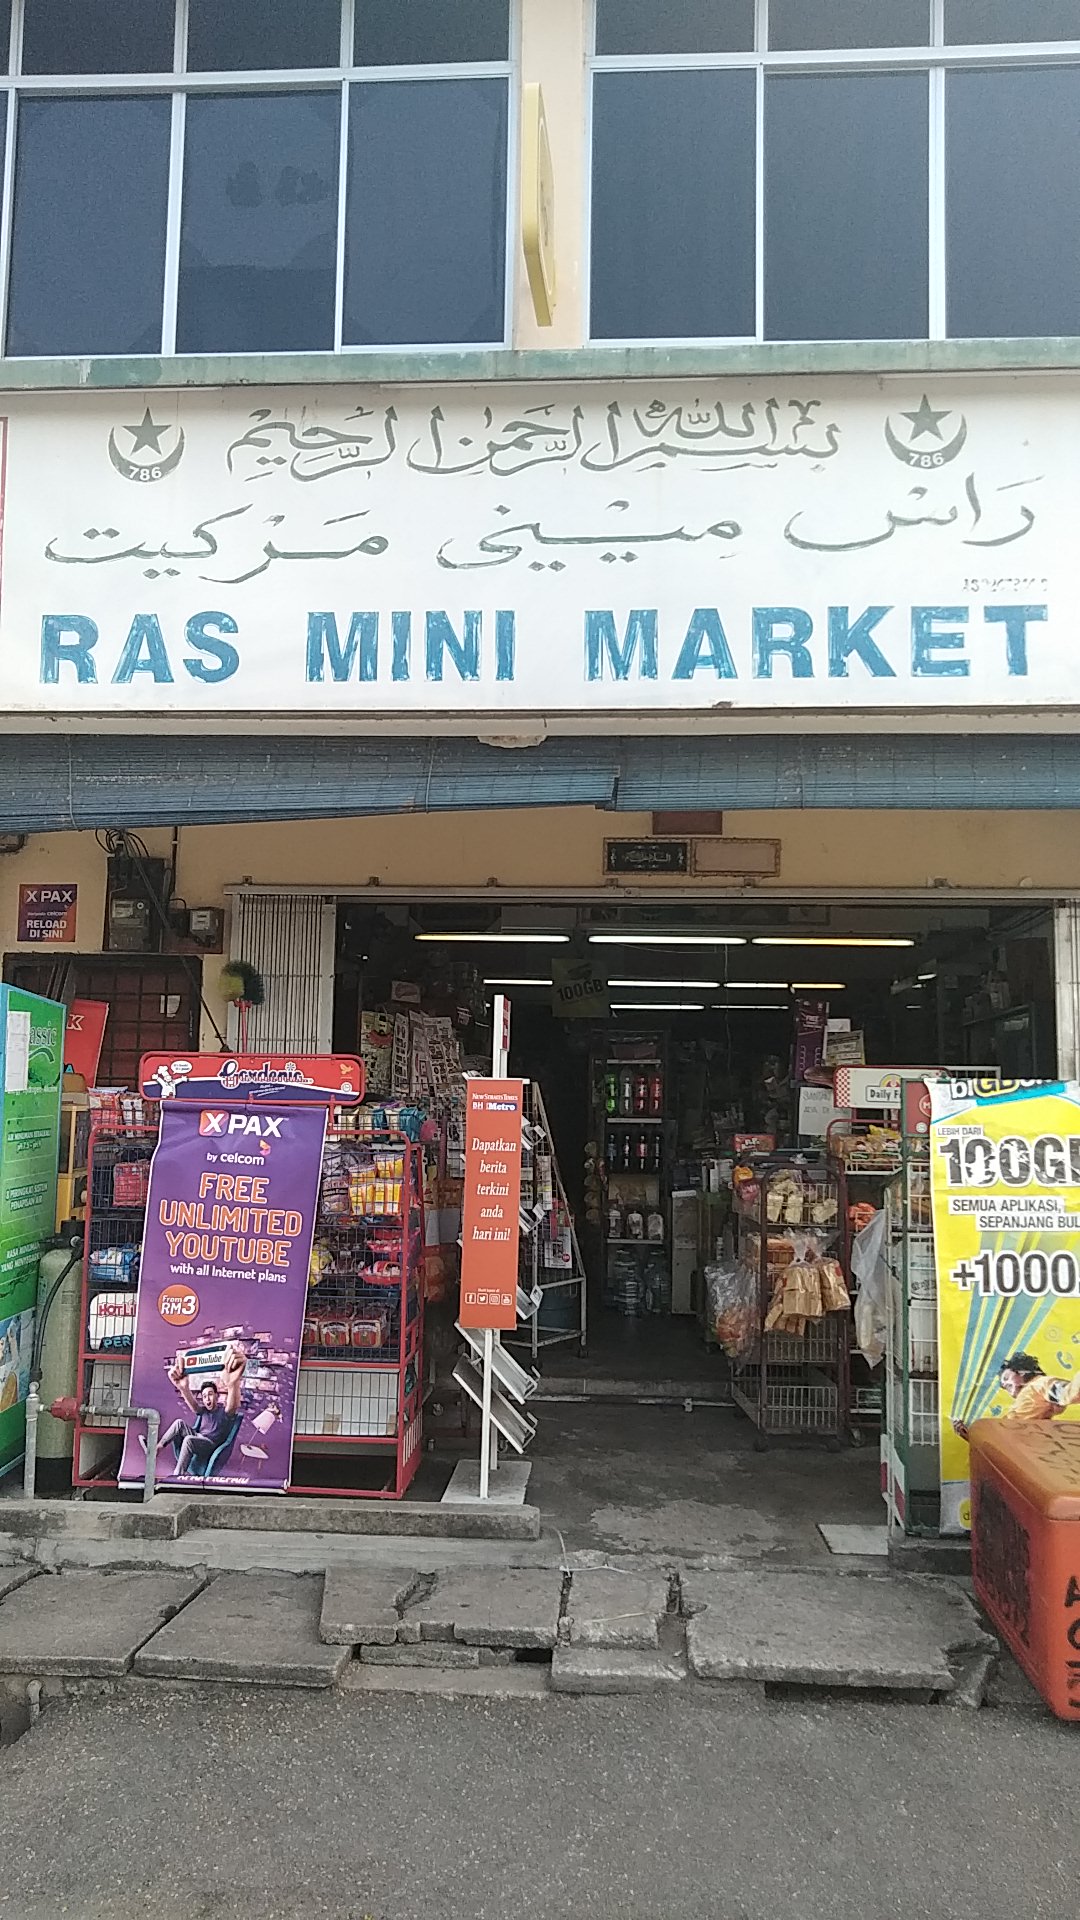 Ras mini market